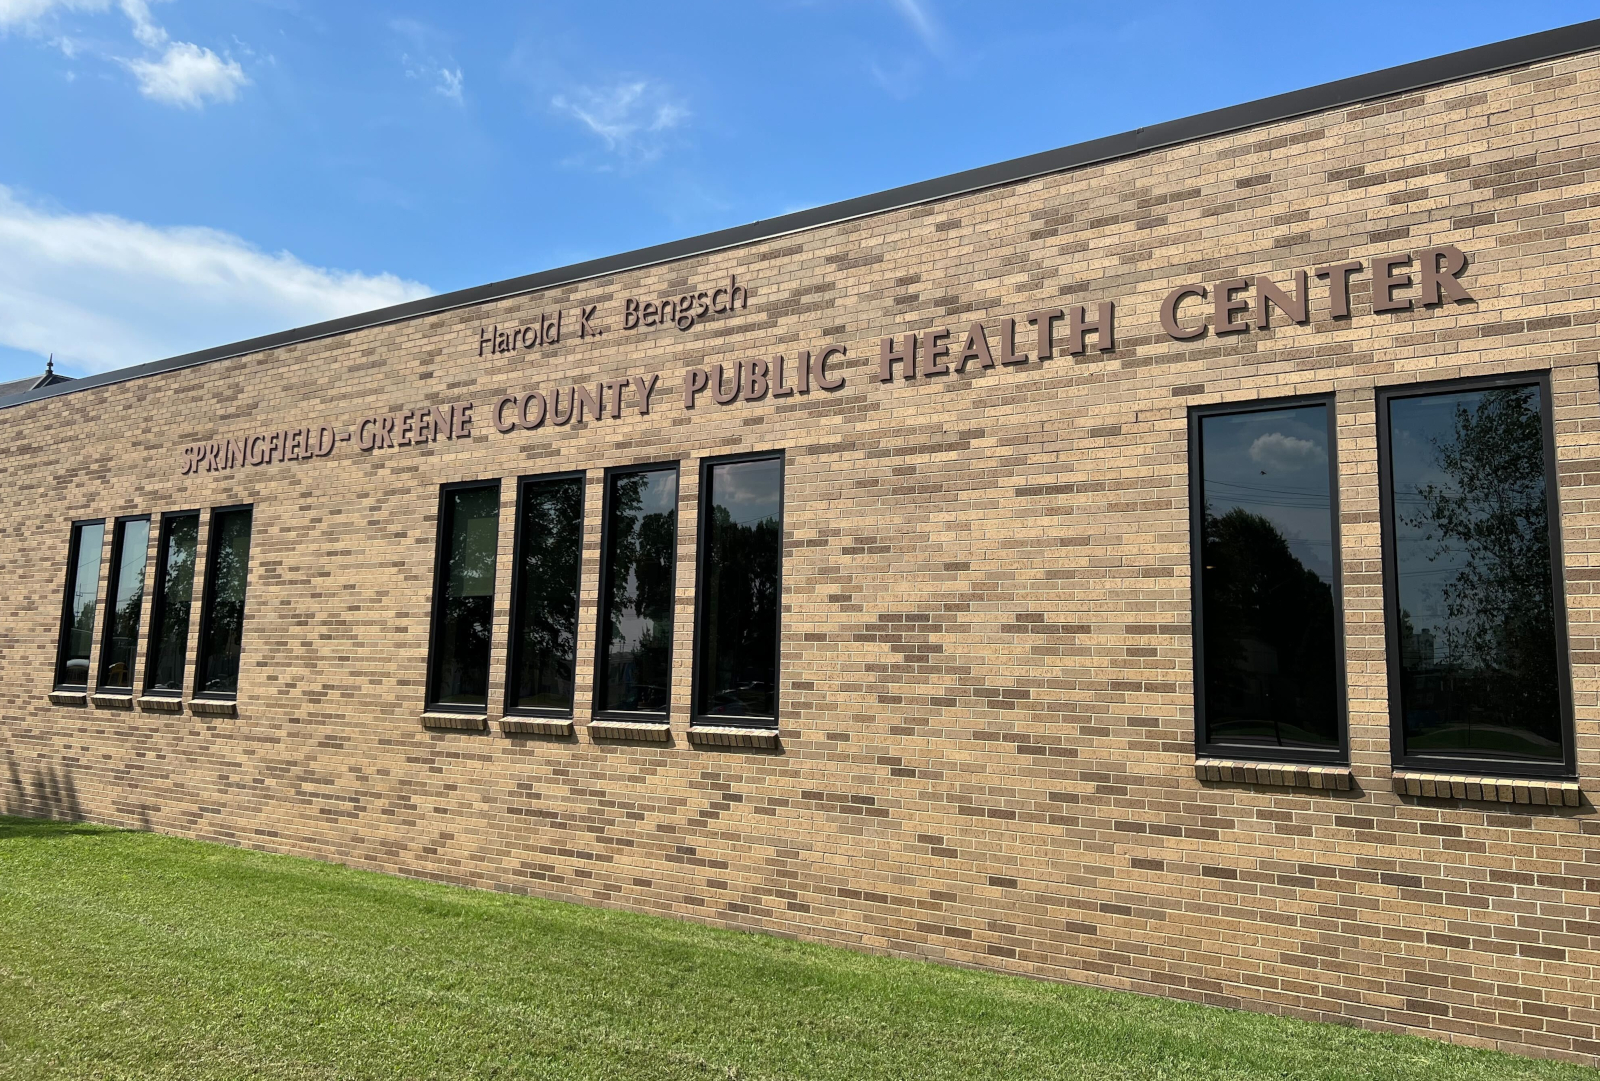 Springfield-Greene County Health Department building